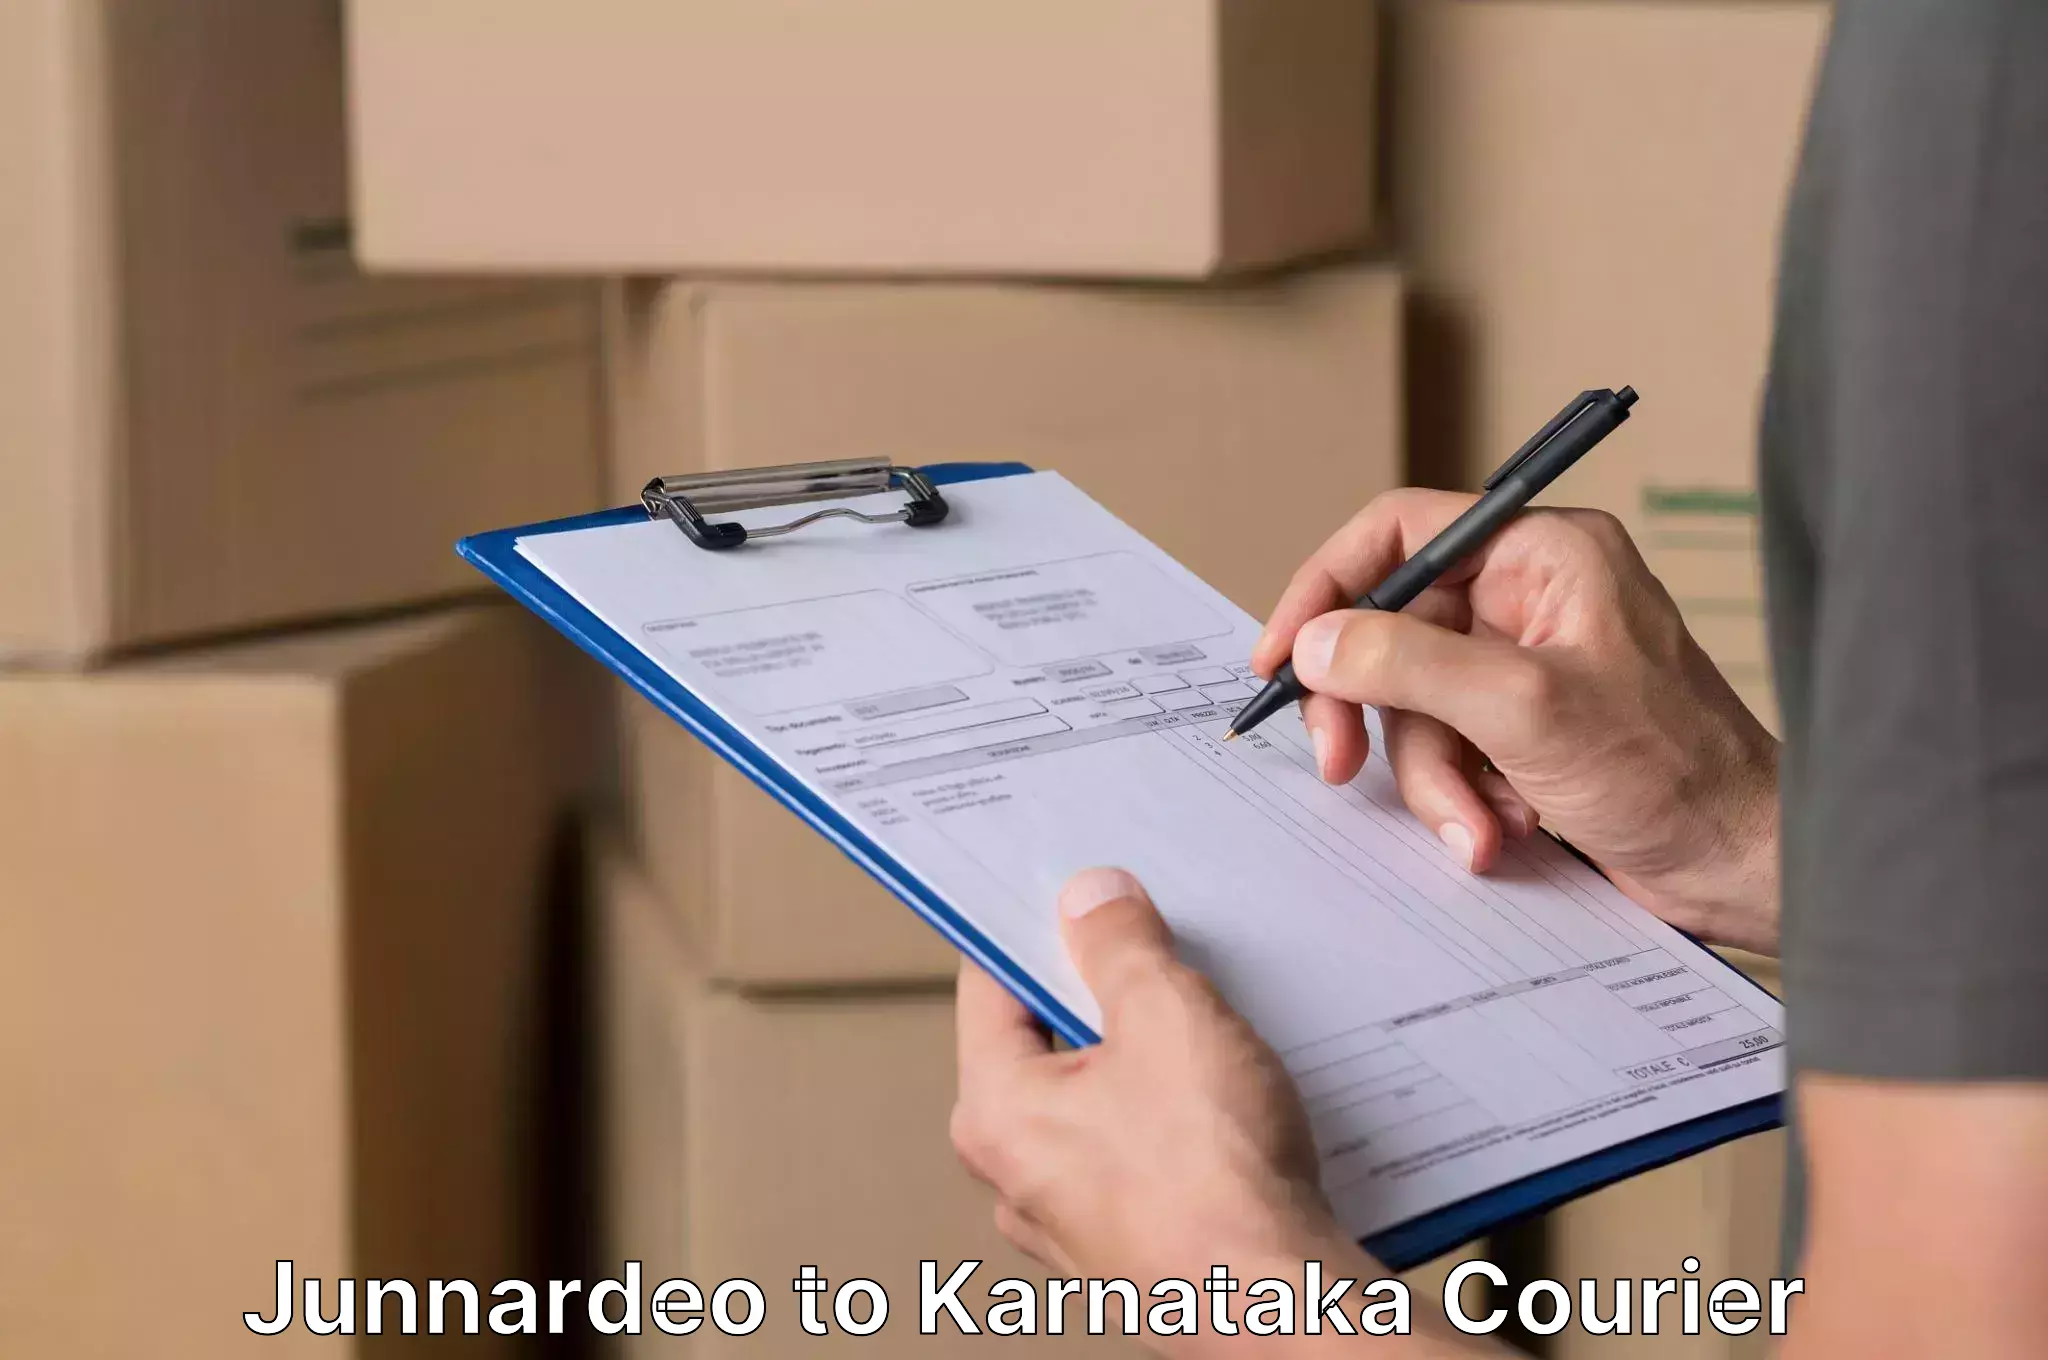 Furniture transport specialists Junnardeo to Karnataka